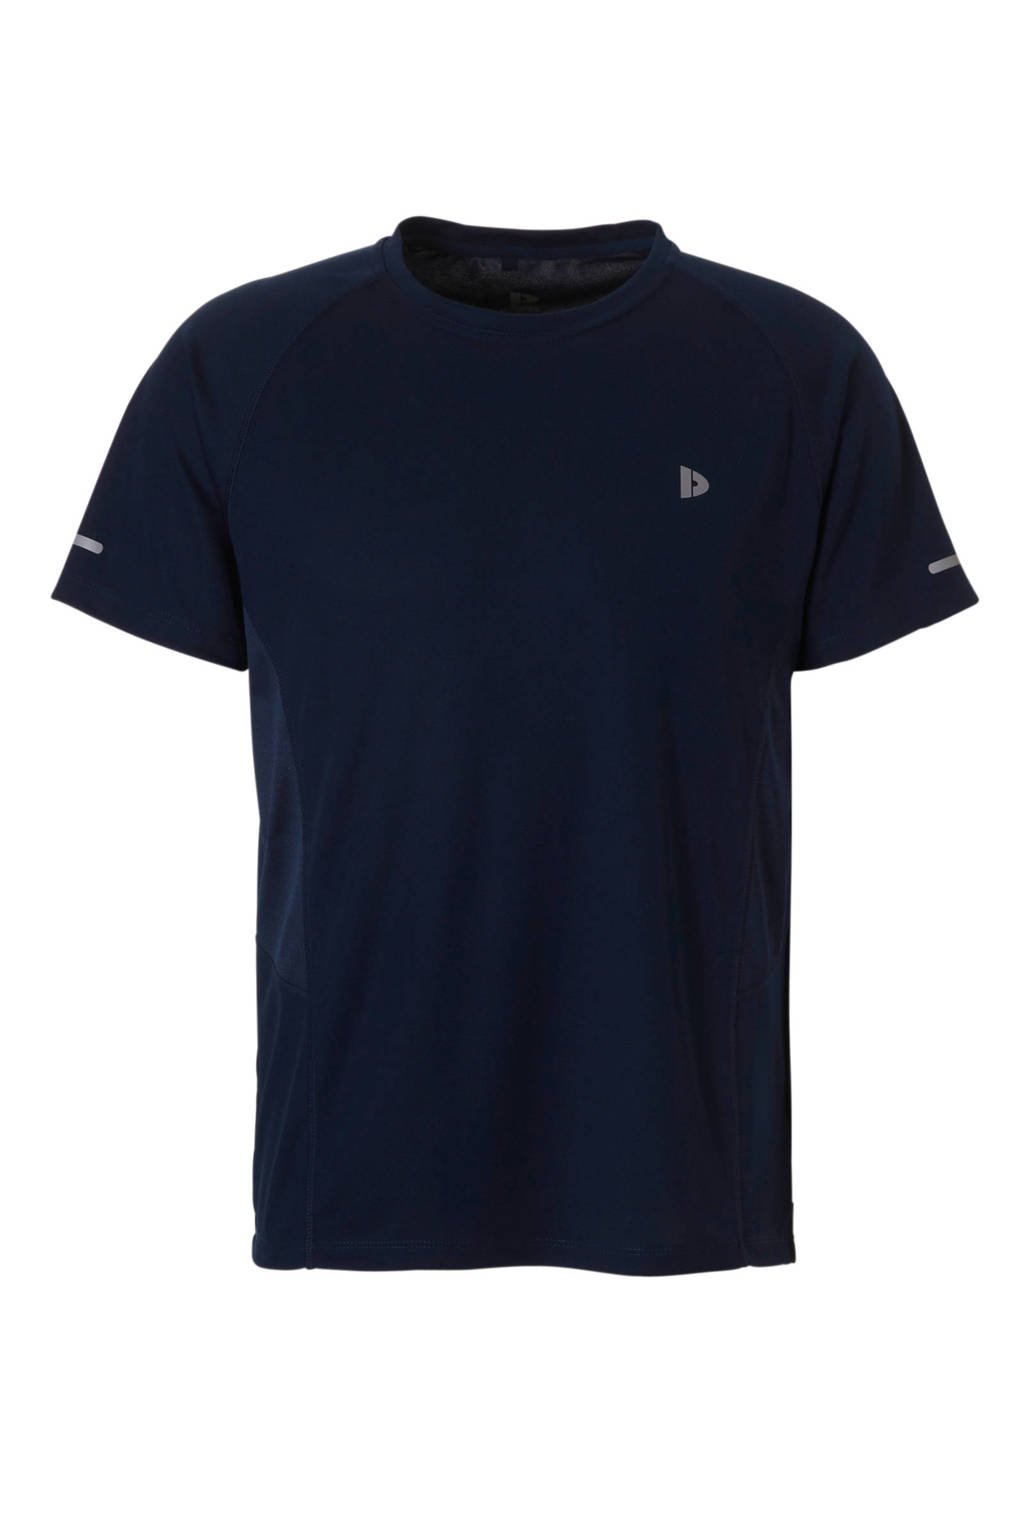 Donnay   sport T-shirt donkerblauw